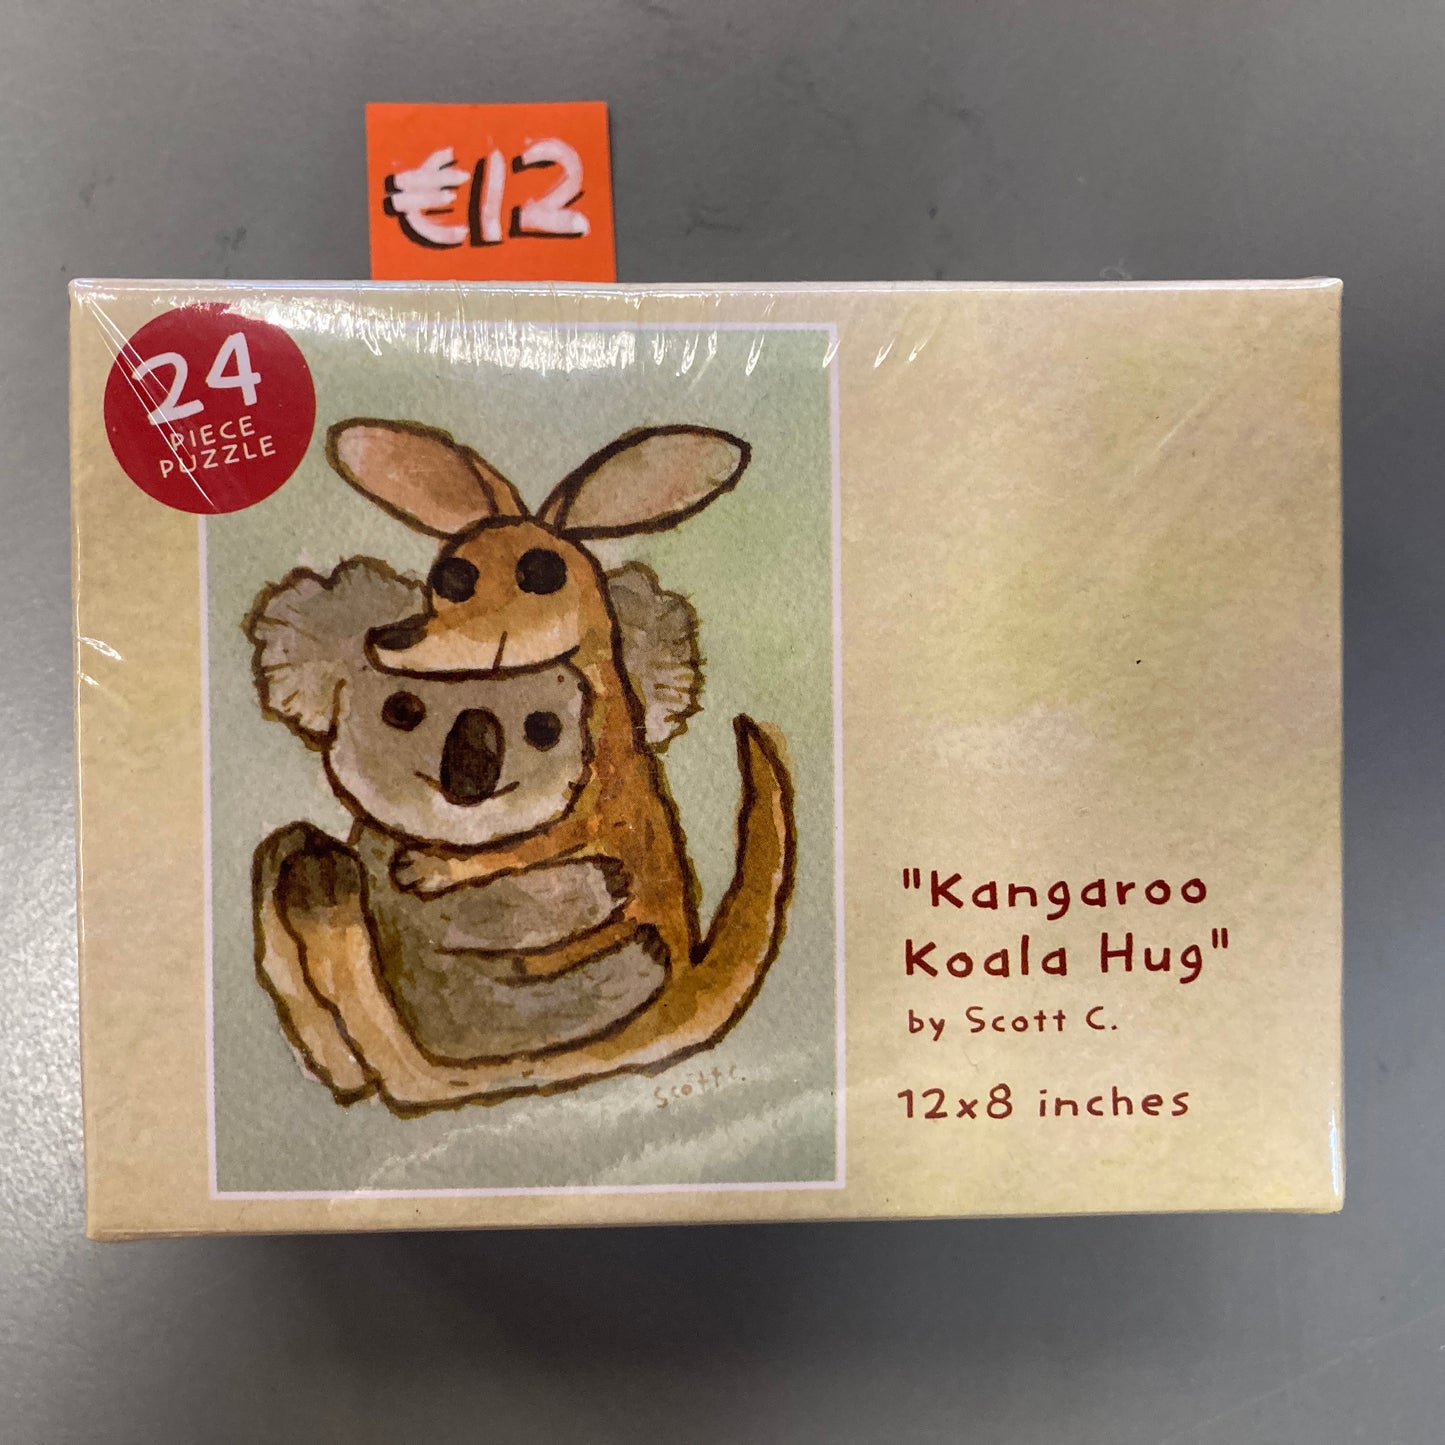 Kangaroo Koala Hug (Jigsaw Puzzle)